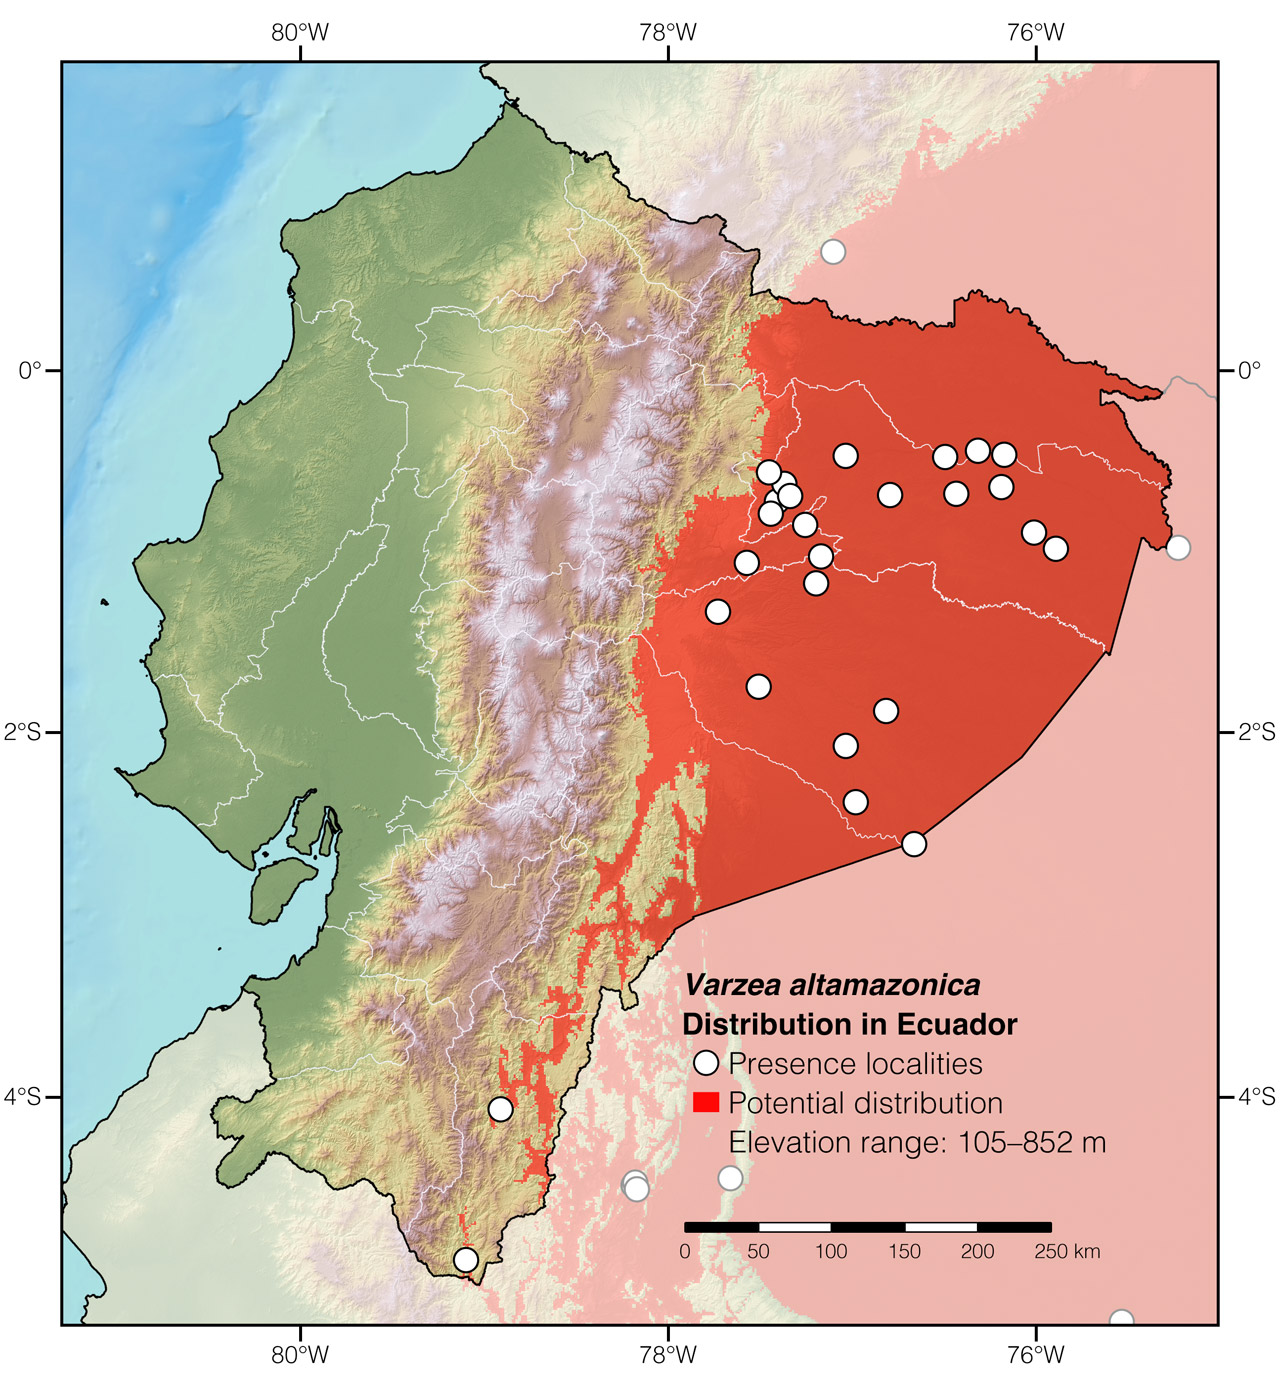 Distribution of Varzea altamazonica in Ecuador